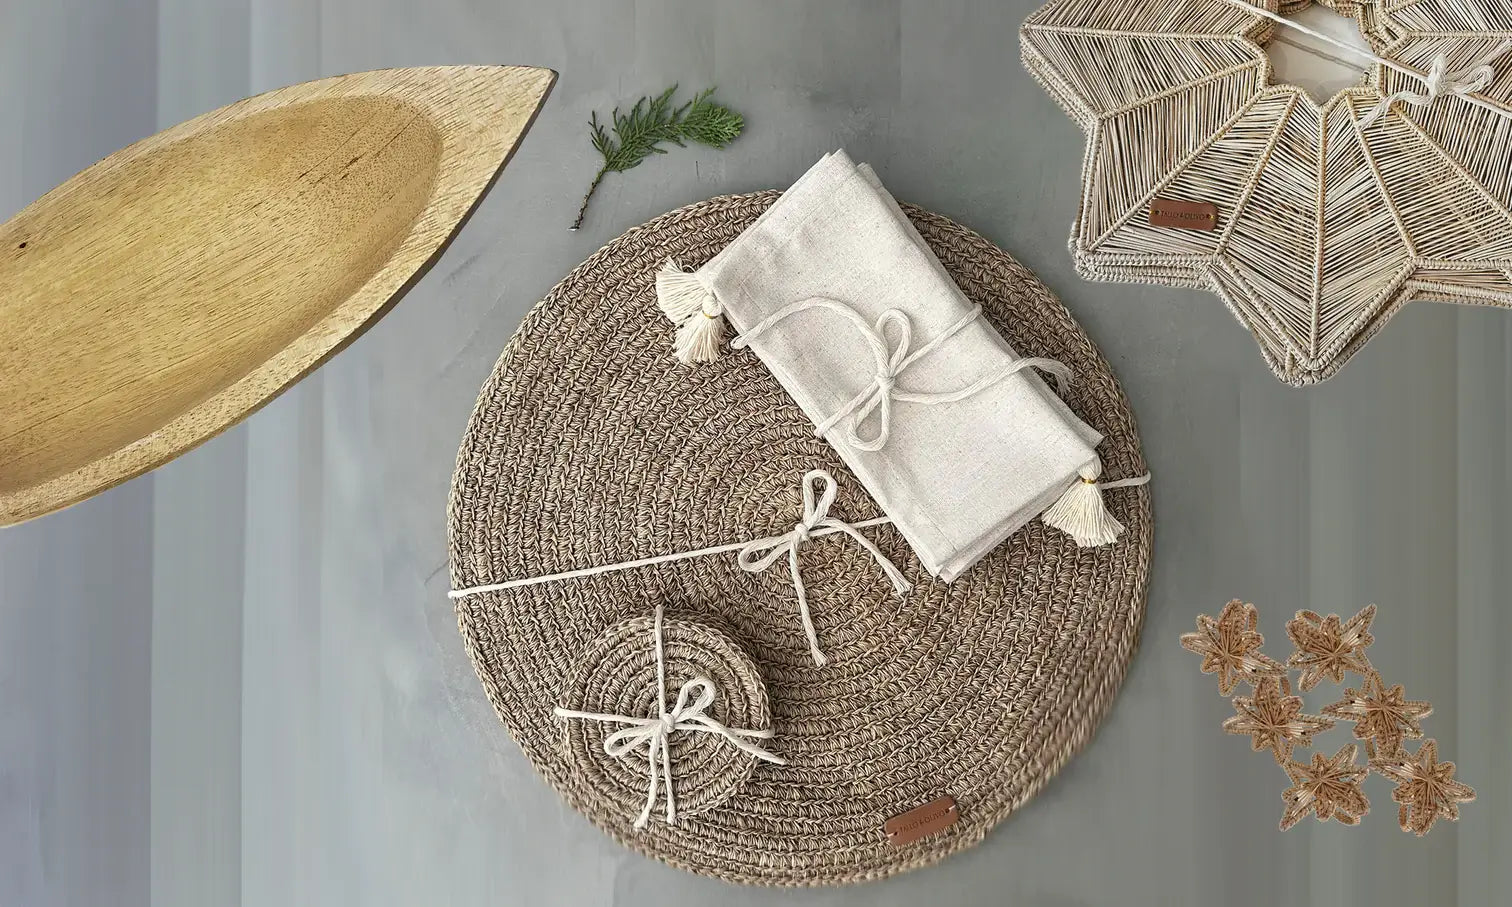 Tallo de Olivo Home Decor - placemats, napkins and coasters